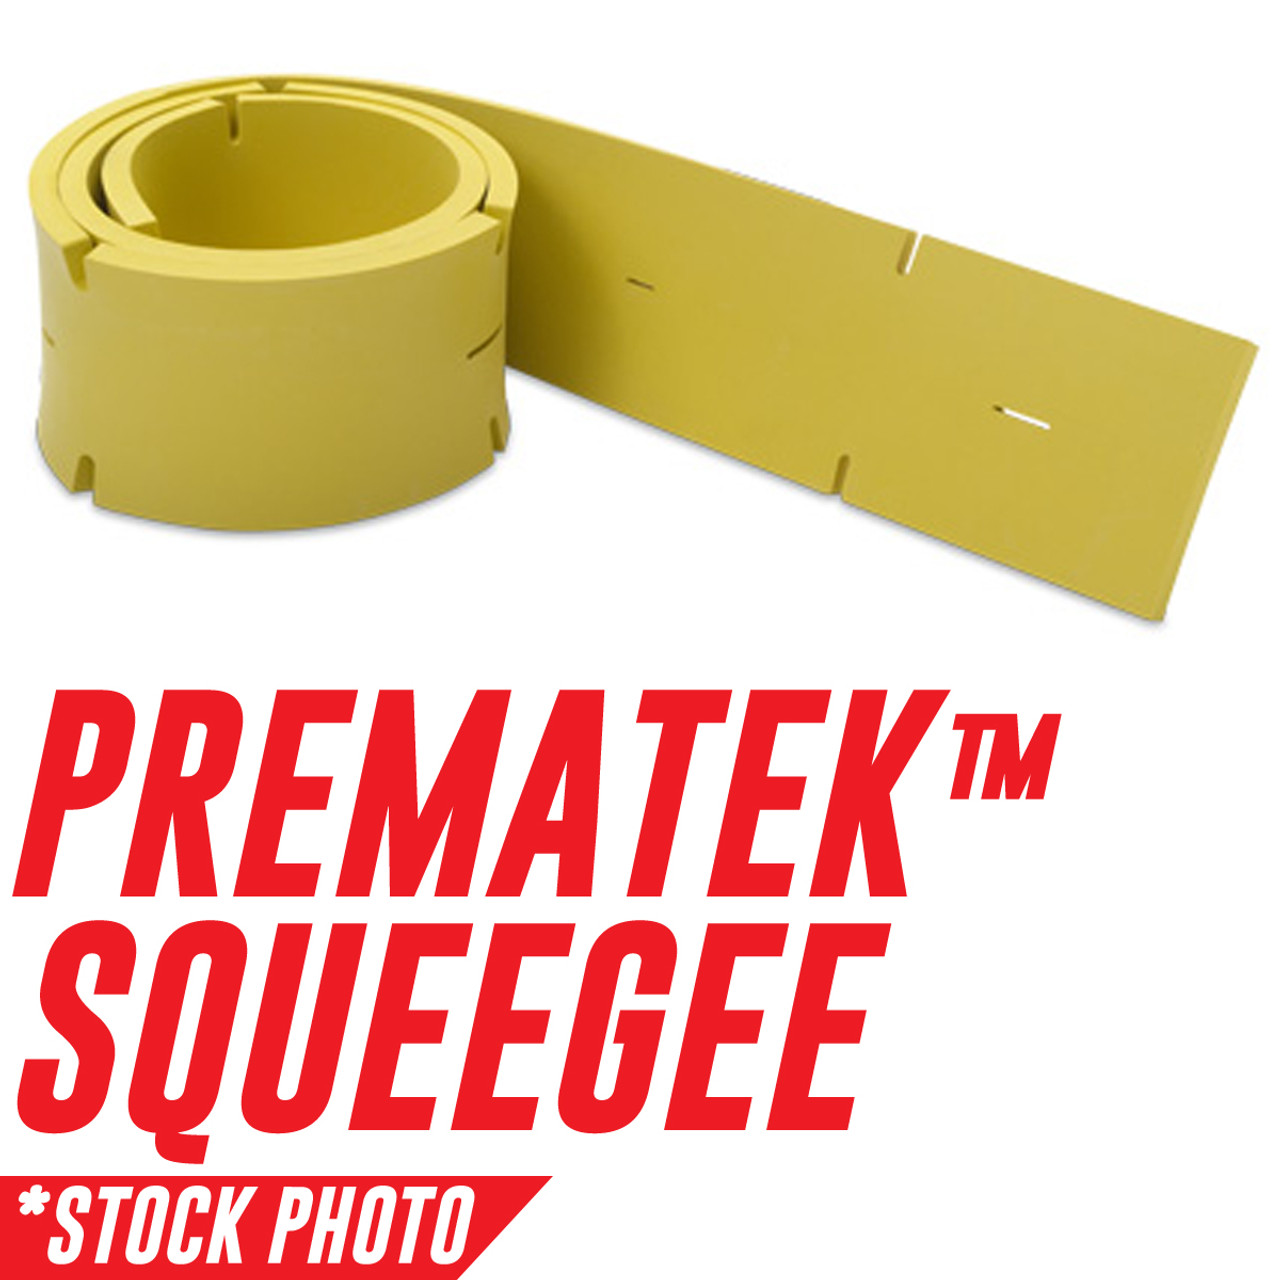 150-754L: Squeegee, Rear 30", Prematek fits Factory Cat Models MicroMag, Pilot/RS